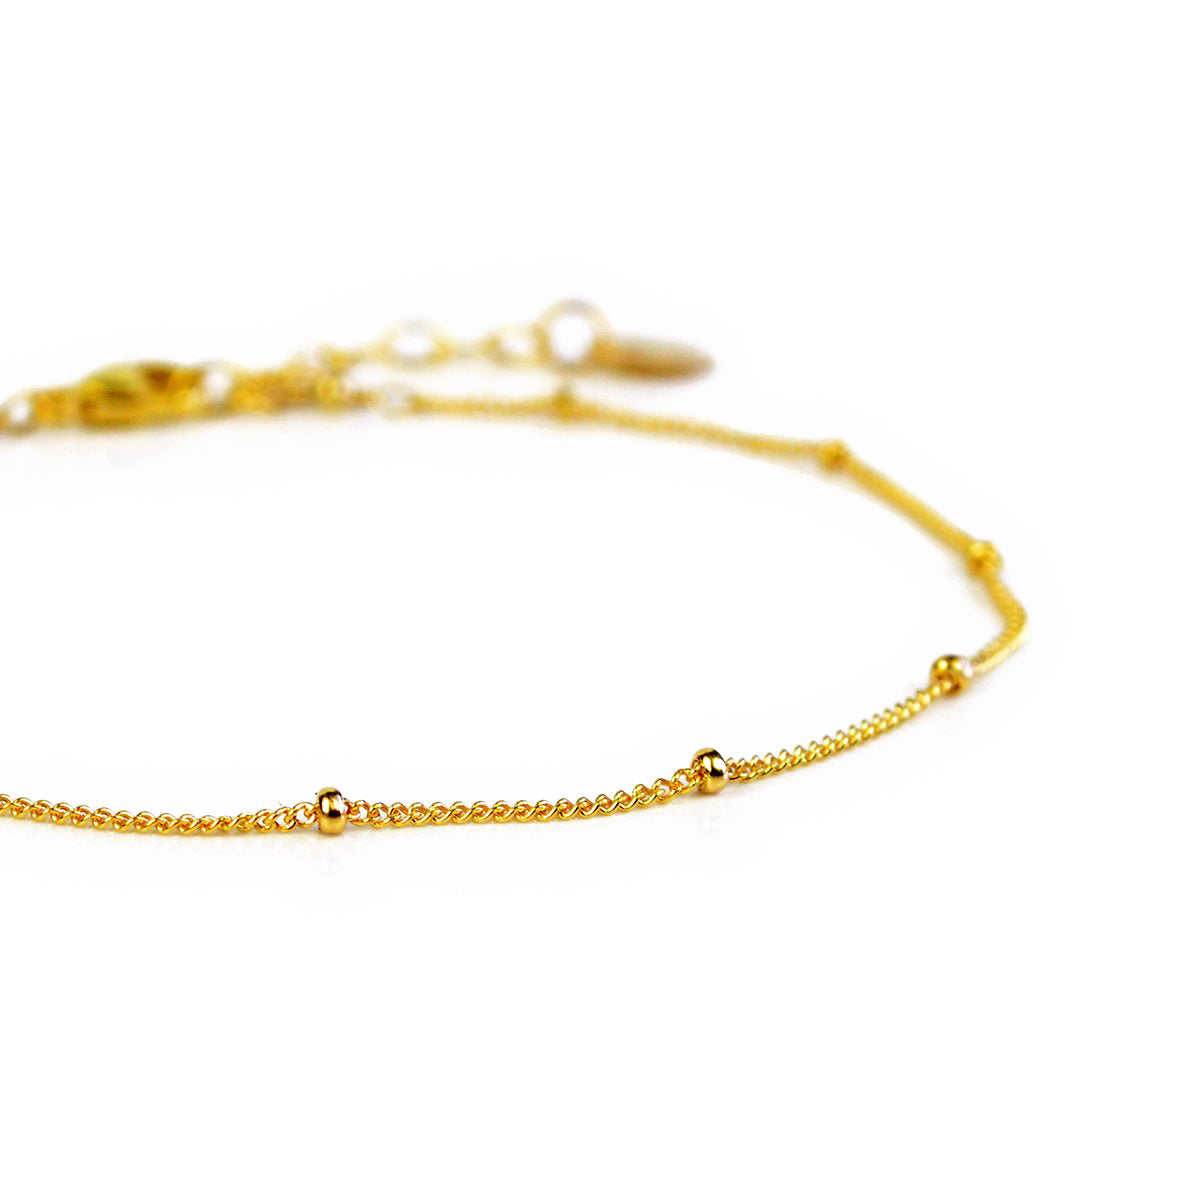 Buy quality Rose gold delicate bracelet in 18kt in Pune